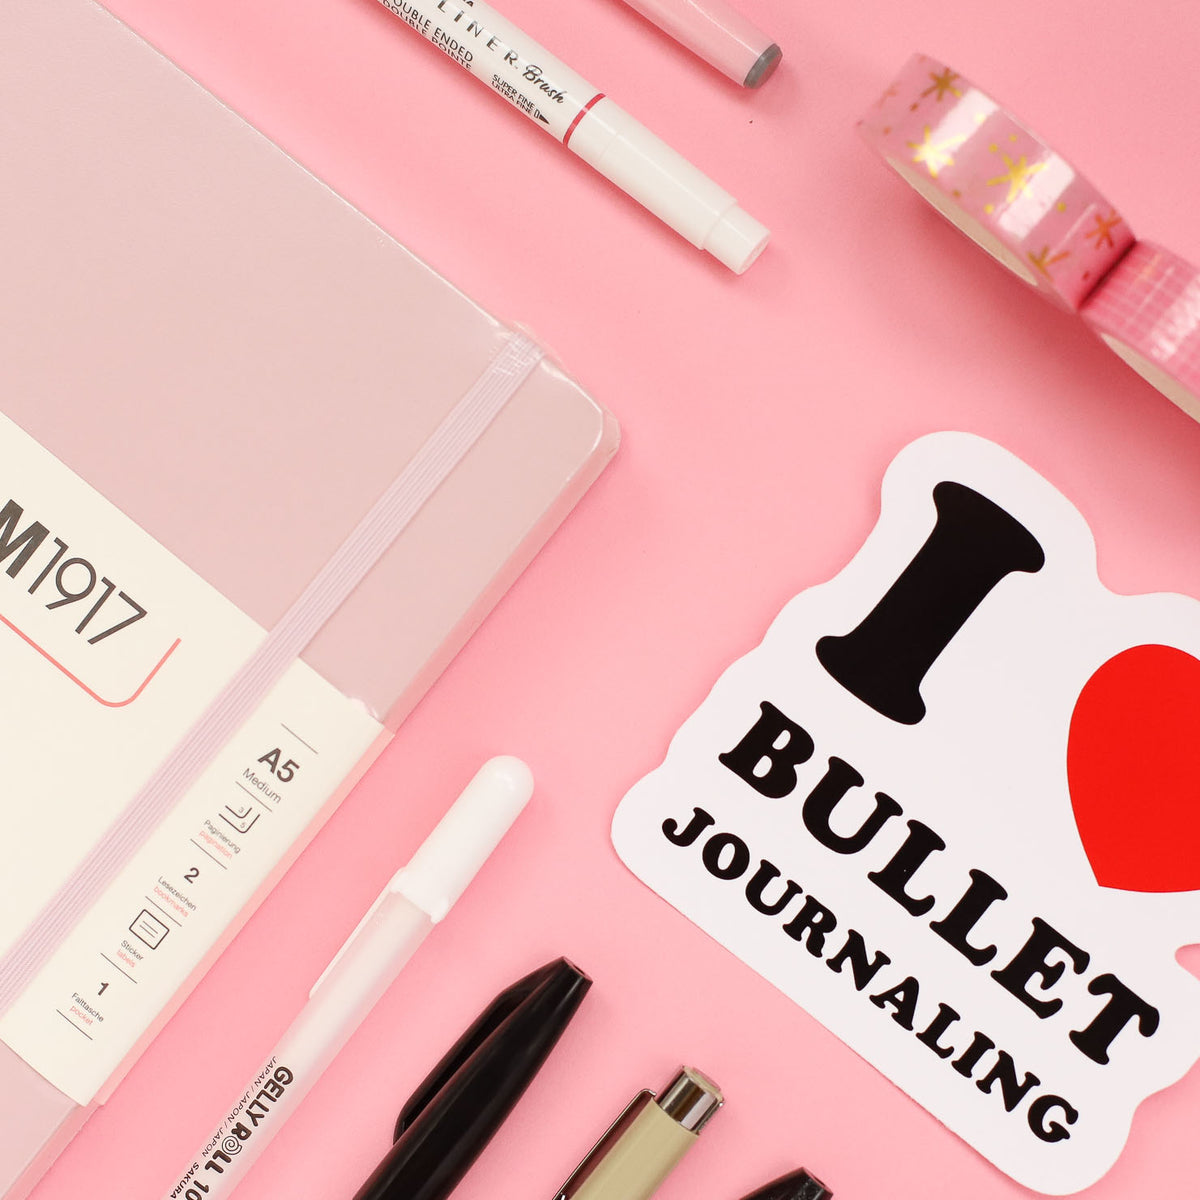 Affordable Bullet Journal Accessories — The Best Bullet Journal Starter Kit